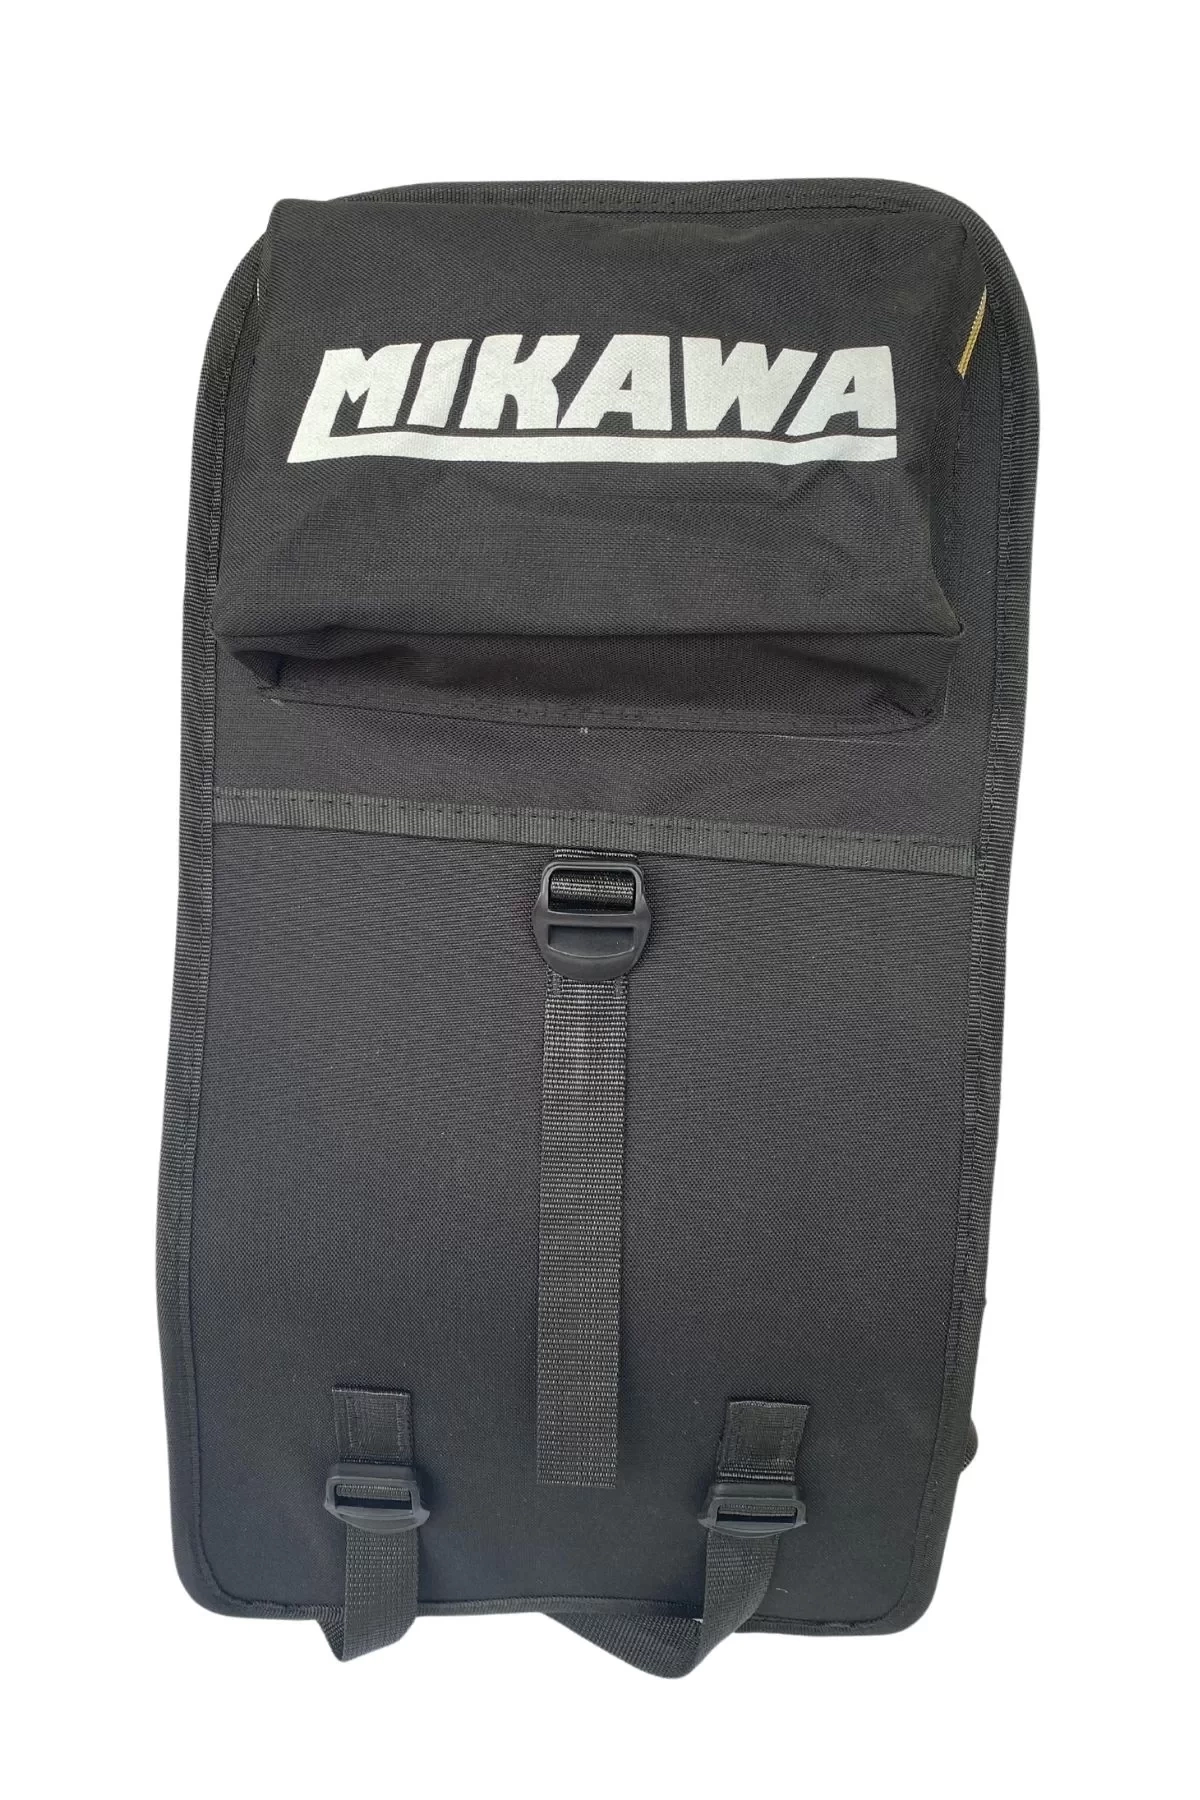 Kawasaki Mikawa Orjinal Sırt Tırpan Minder Yeleği BP260